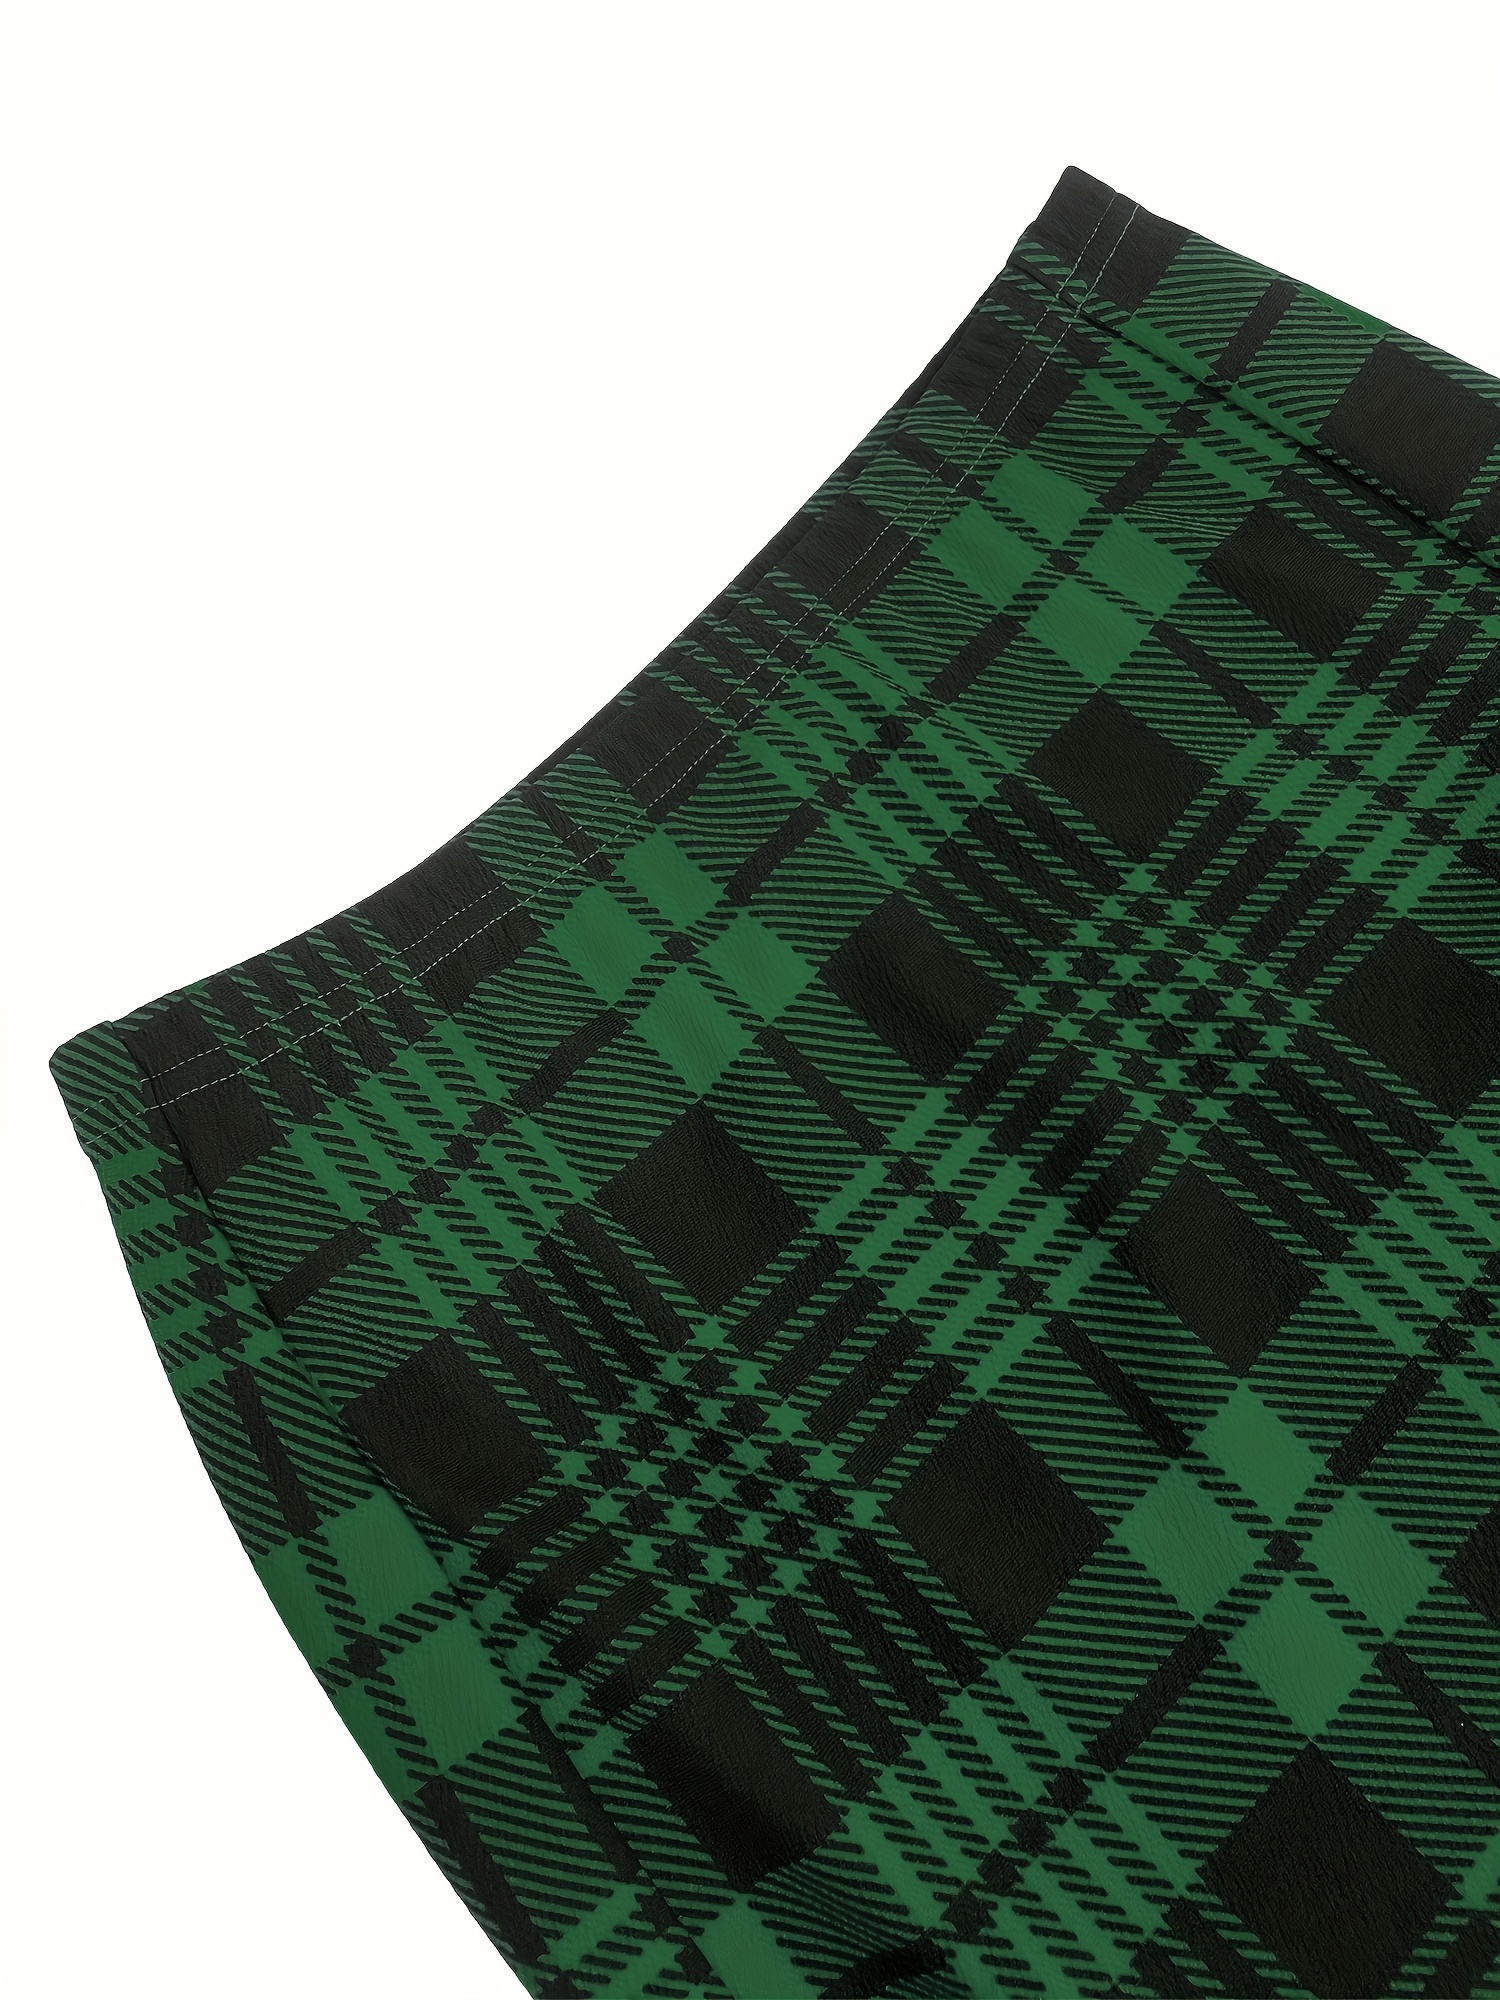 GREEN Tartan PLAID SKIRT Womens Plaid Skirts Tartan Plaid Skirt